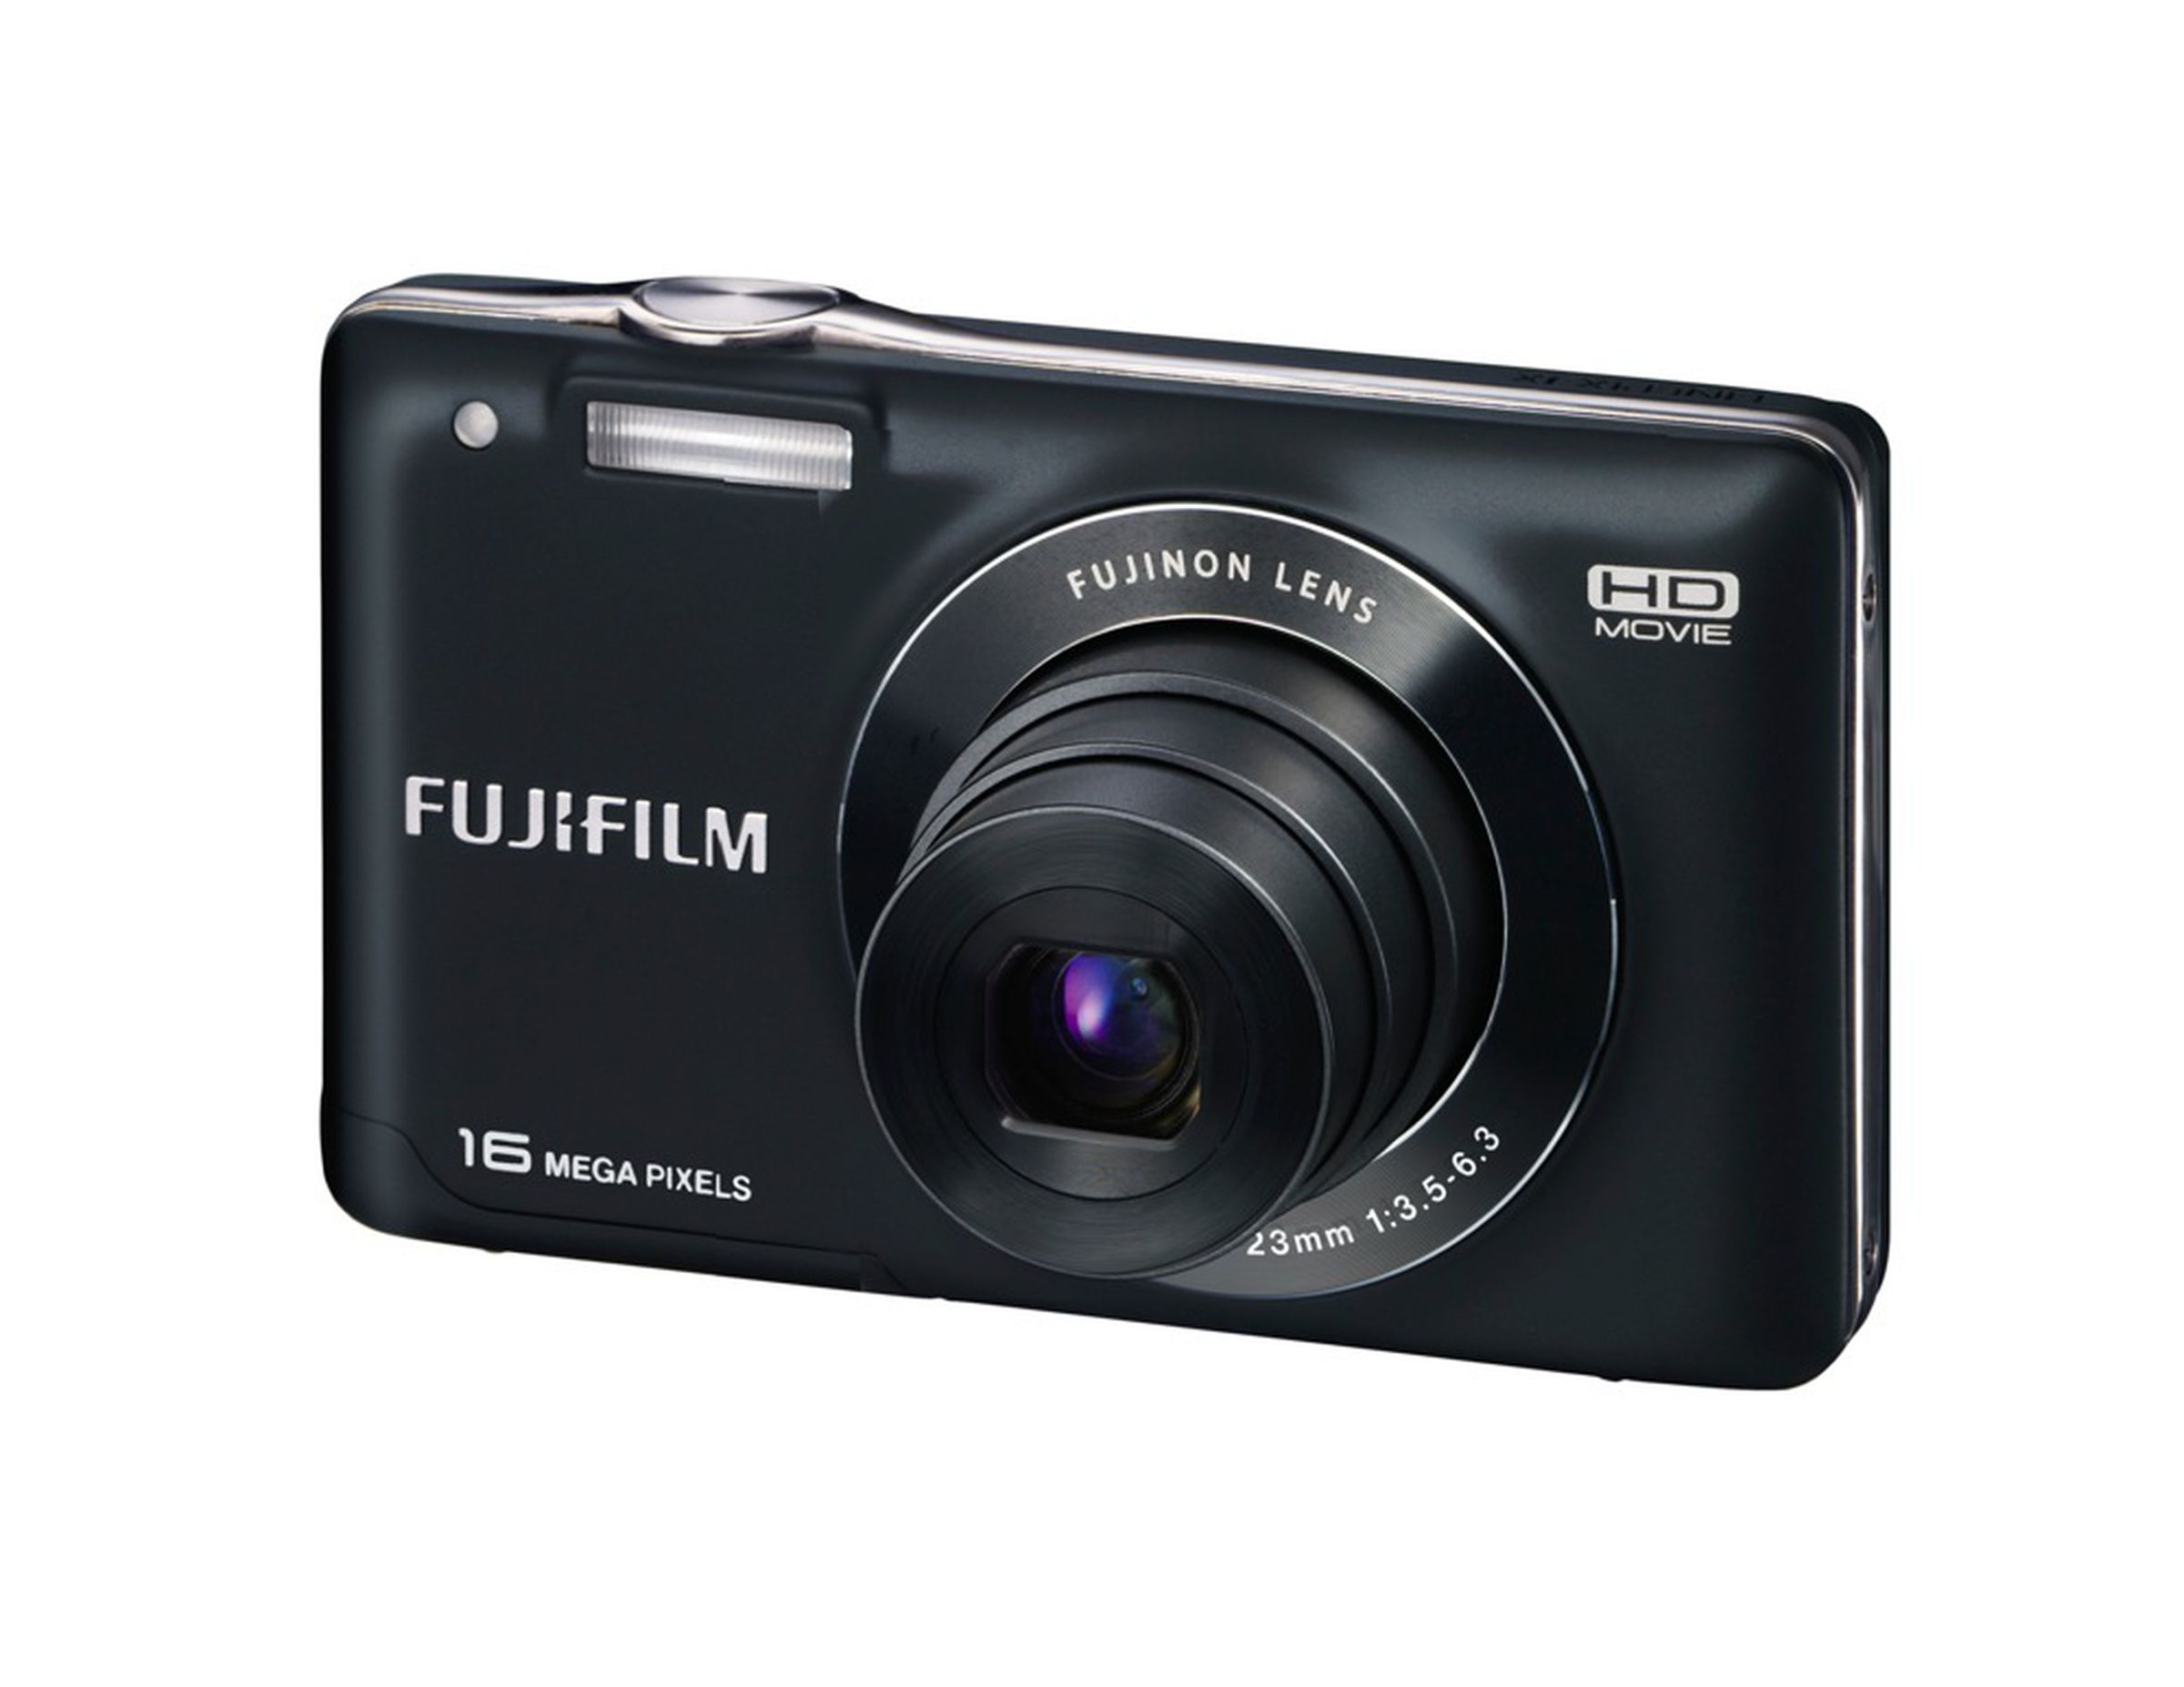 Fujifilm's 2012 camera lineup